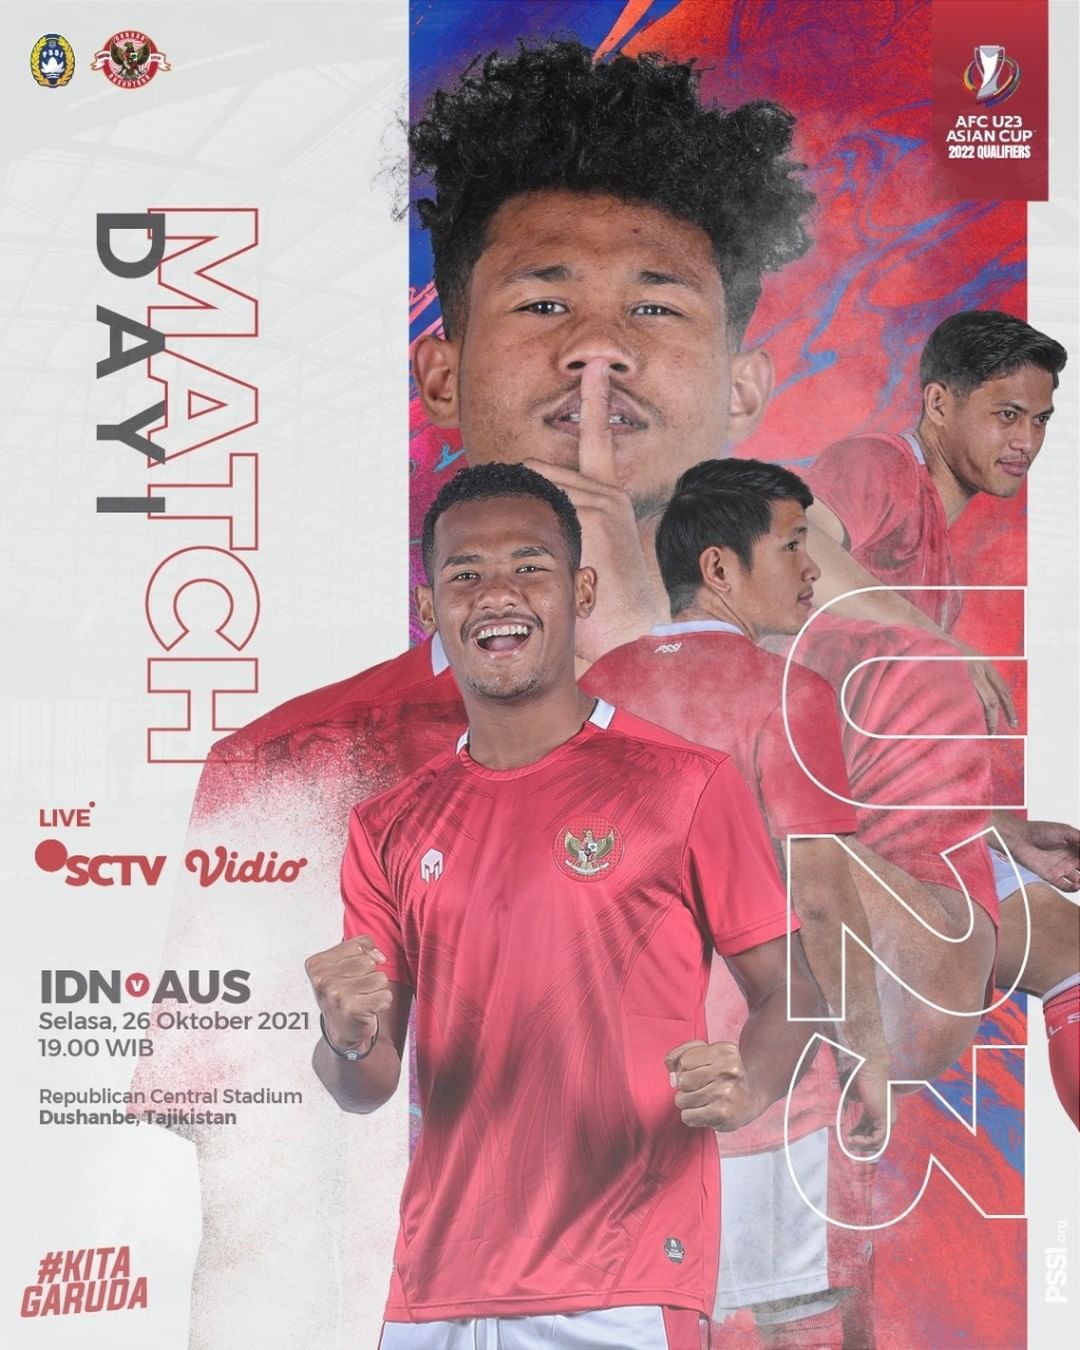 U23 indonesia vs australia